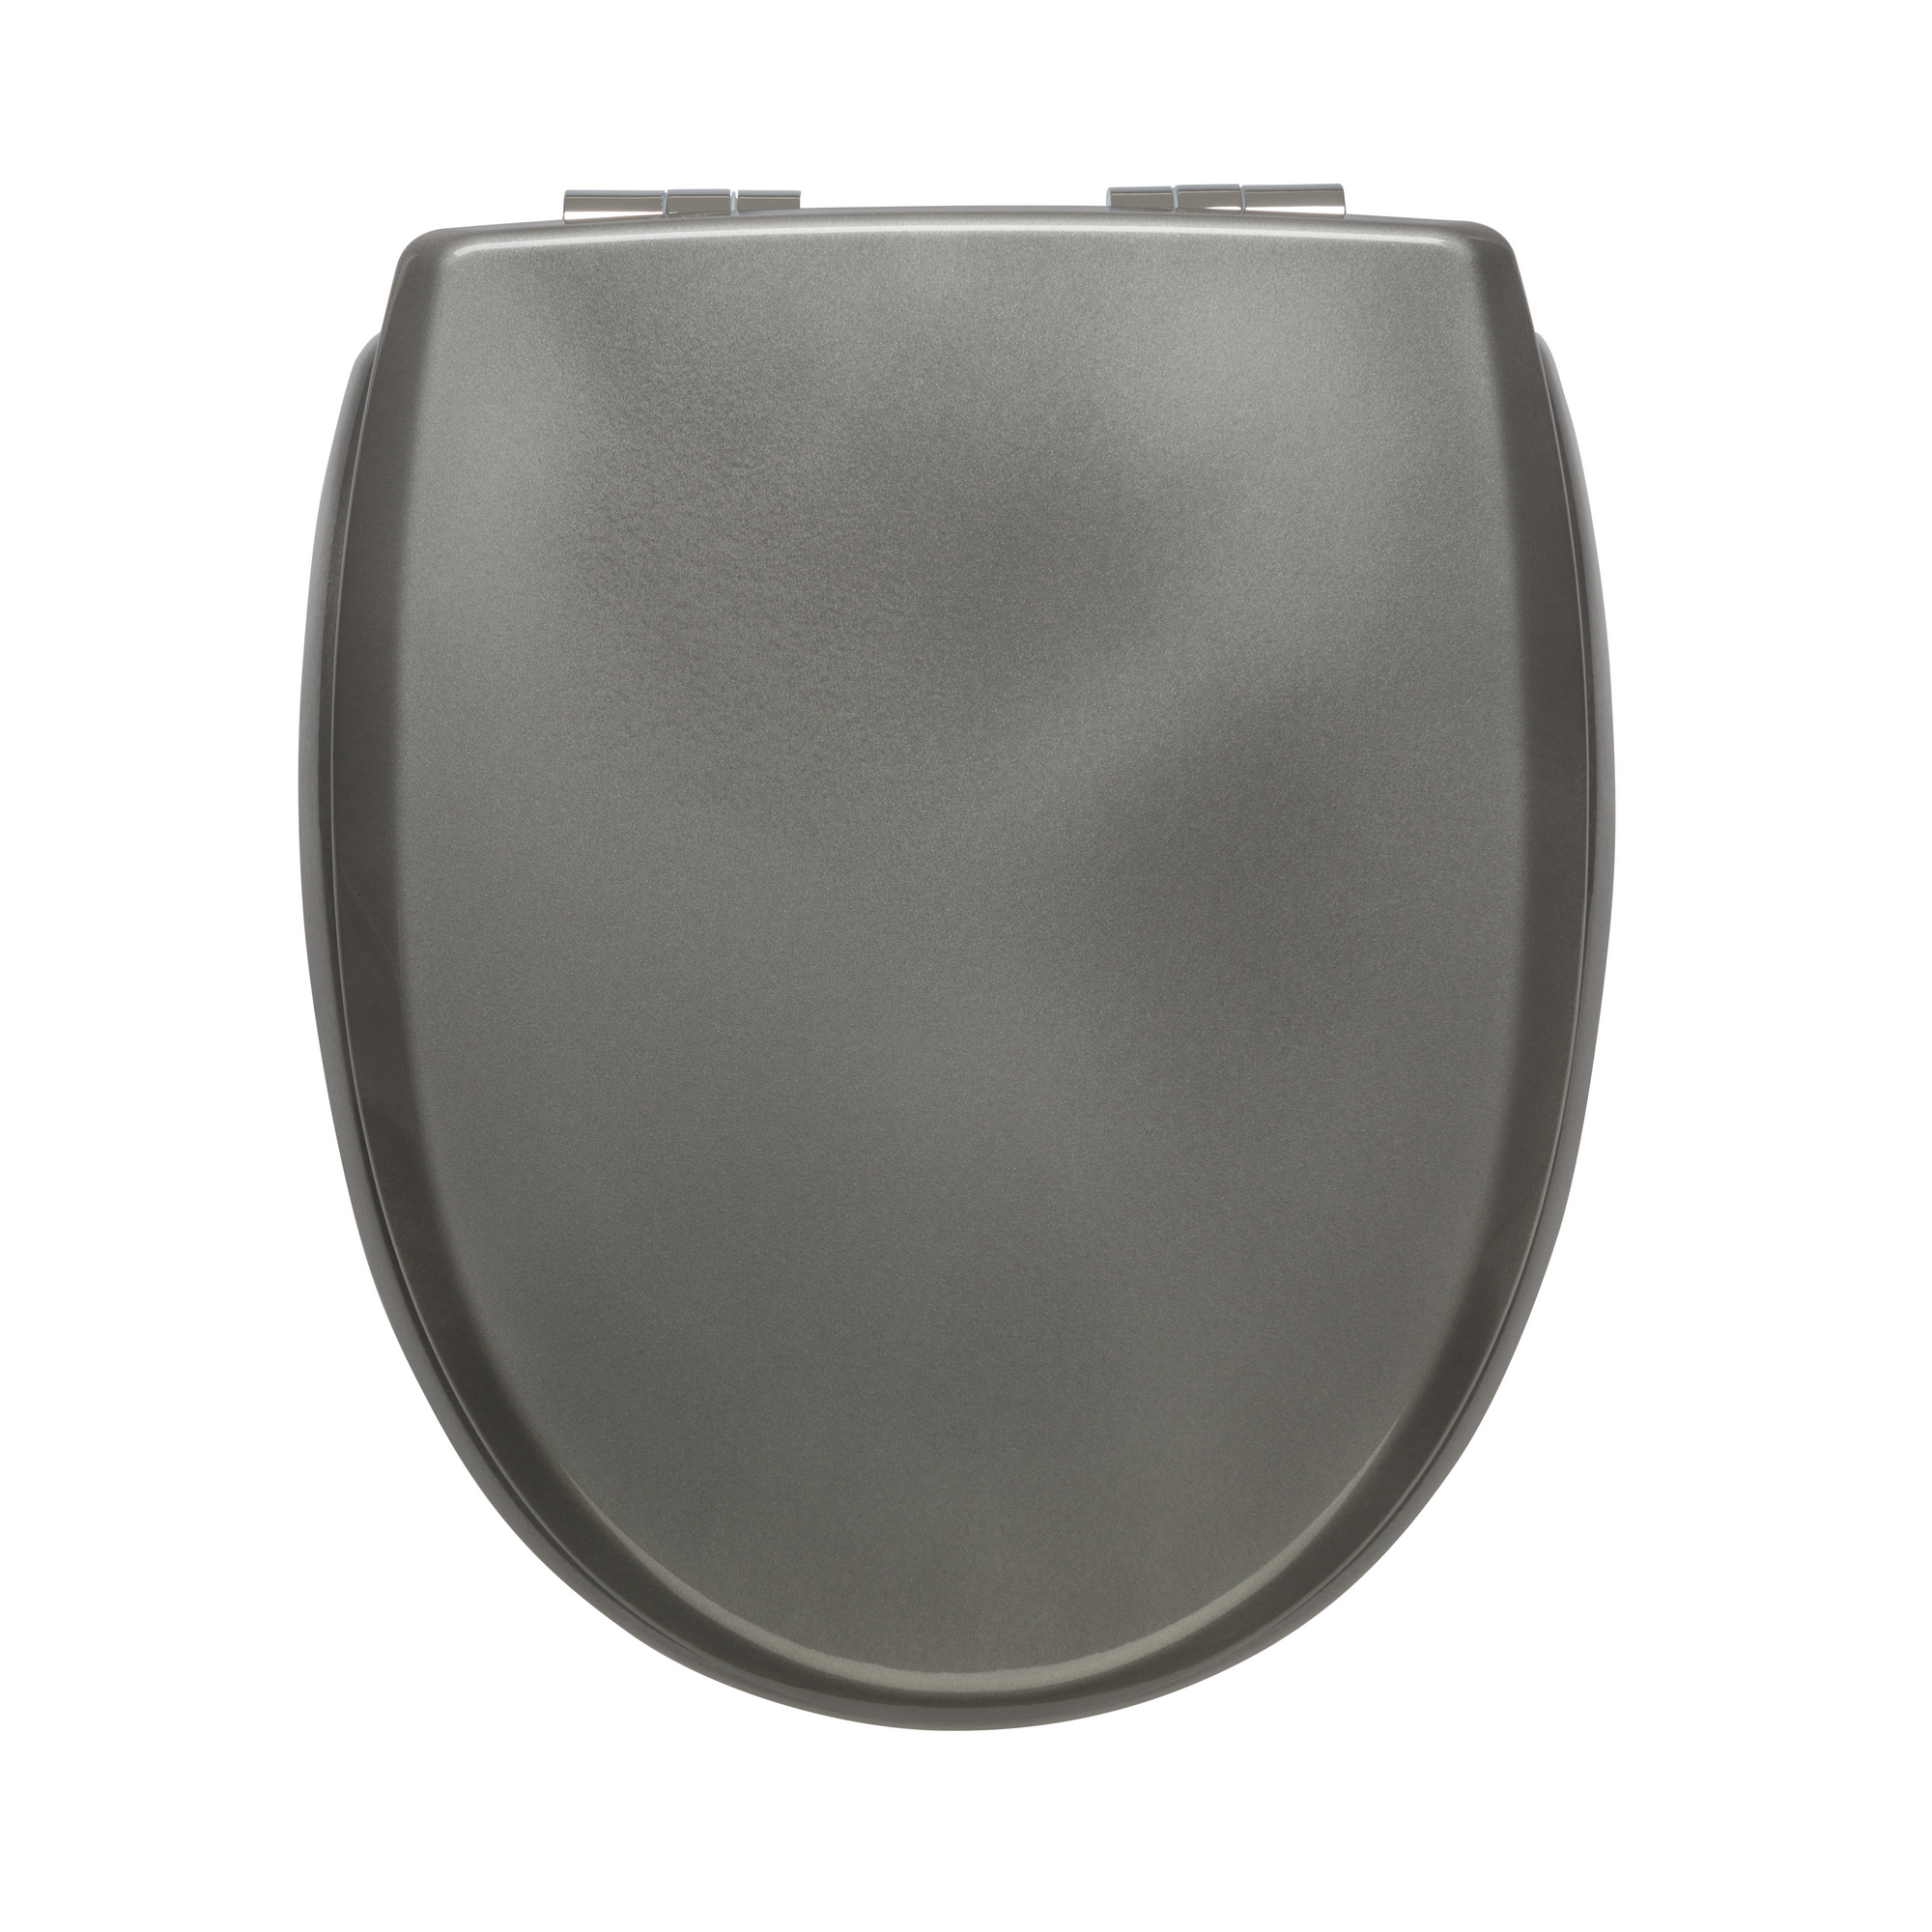 WC-Sitz 'Premium 3001' silber-metallic 45,5 x 38,4 cm + product picture